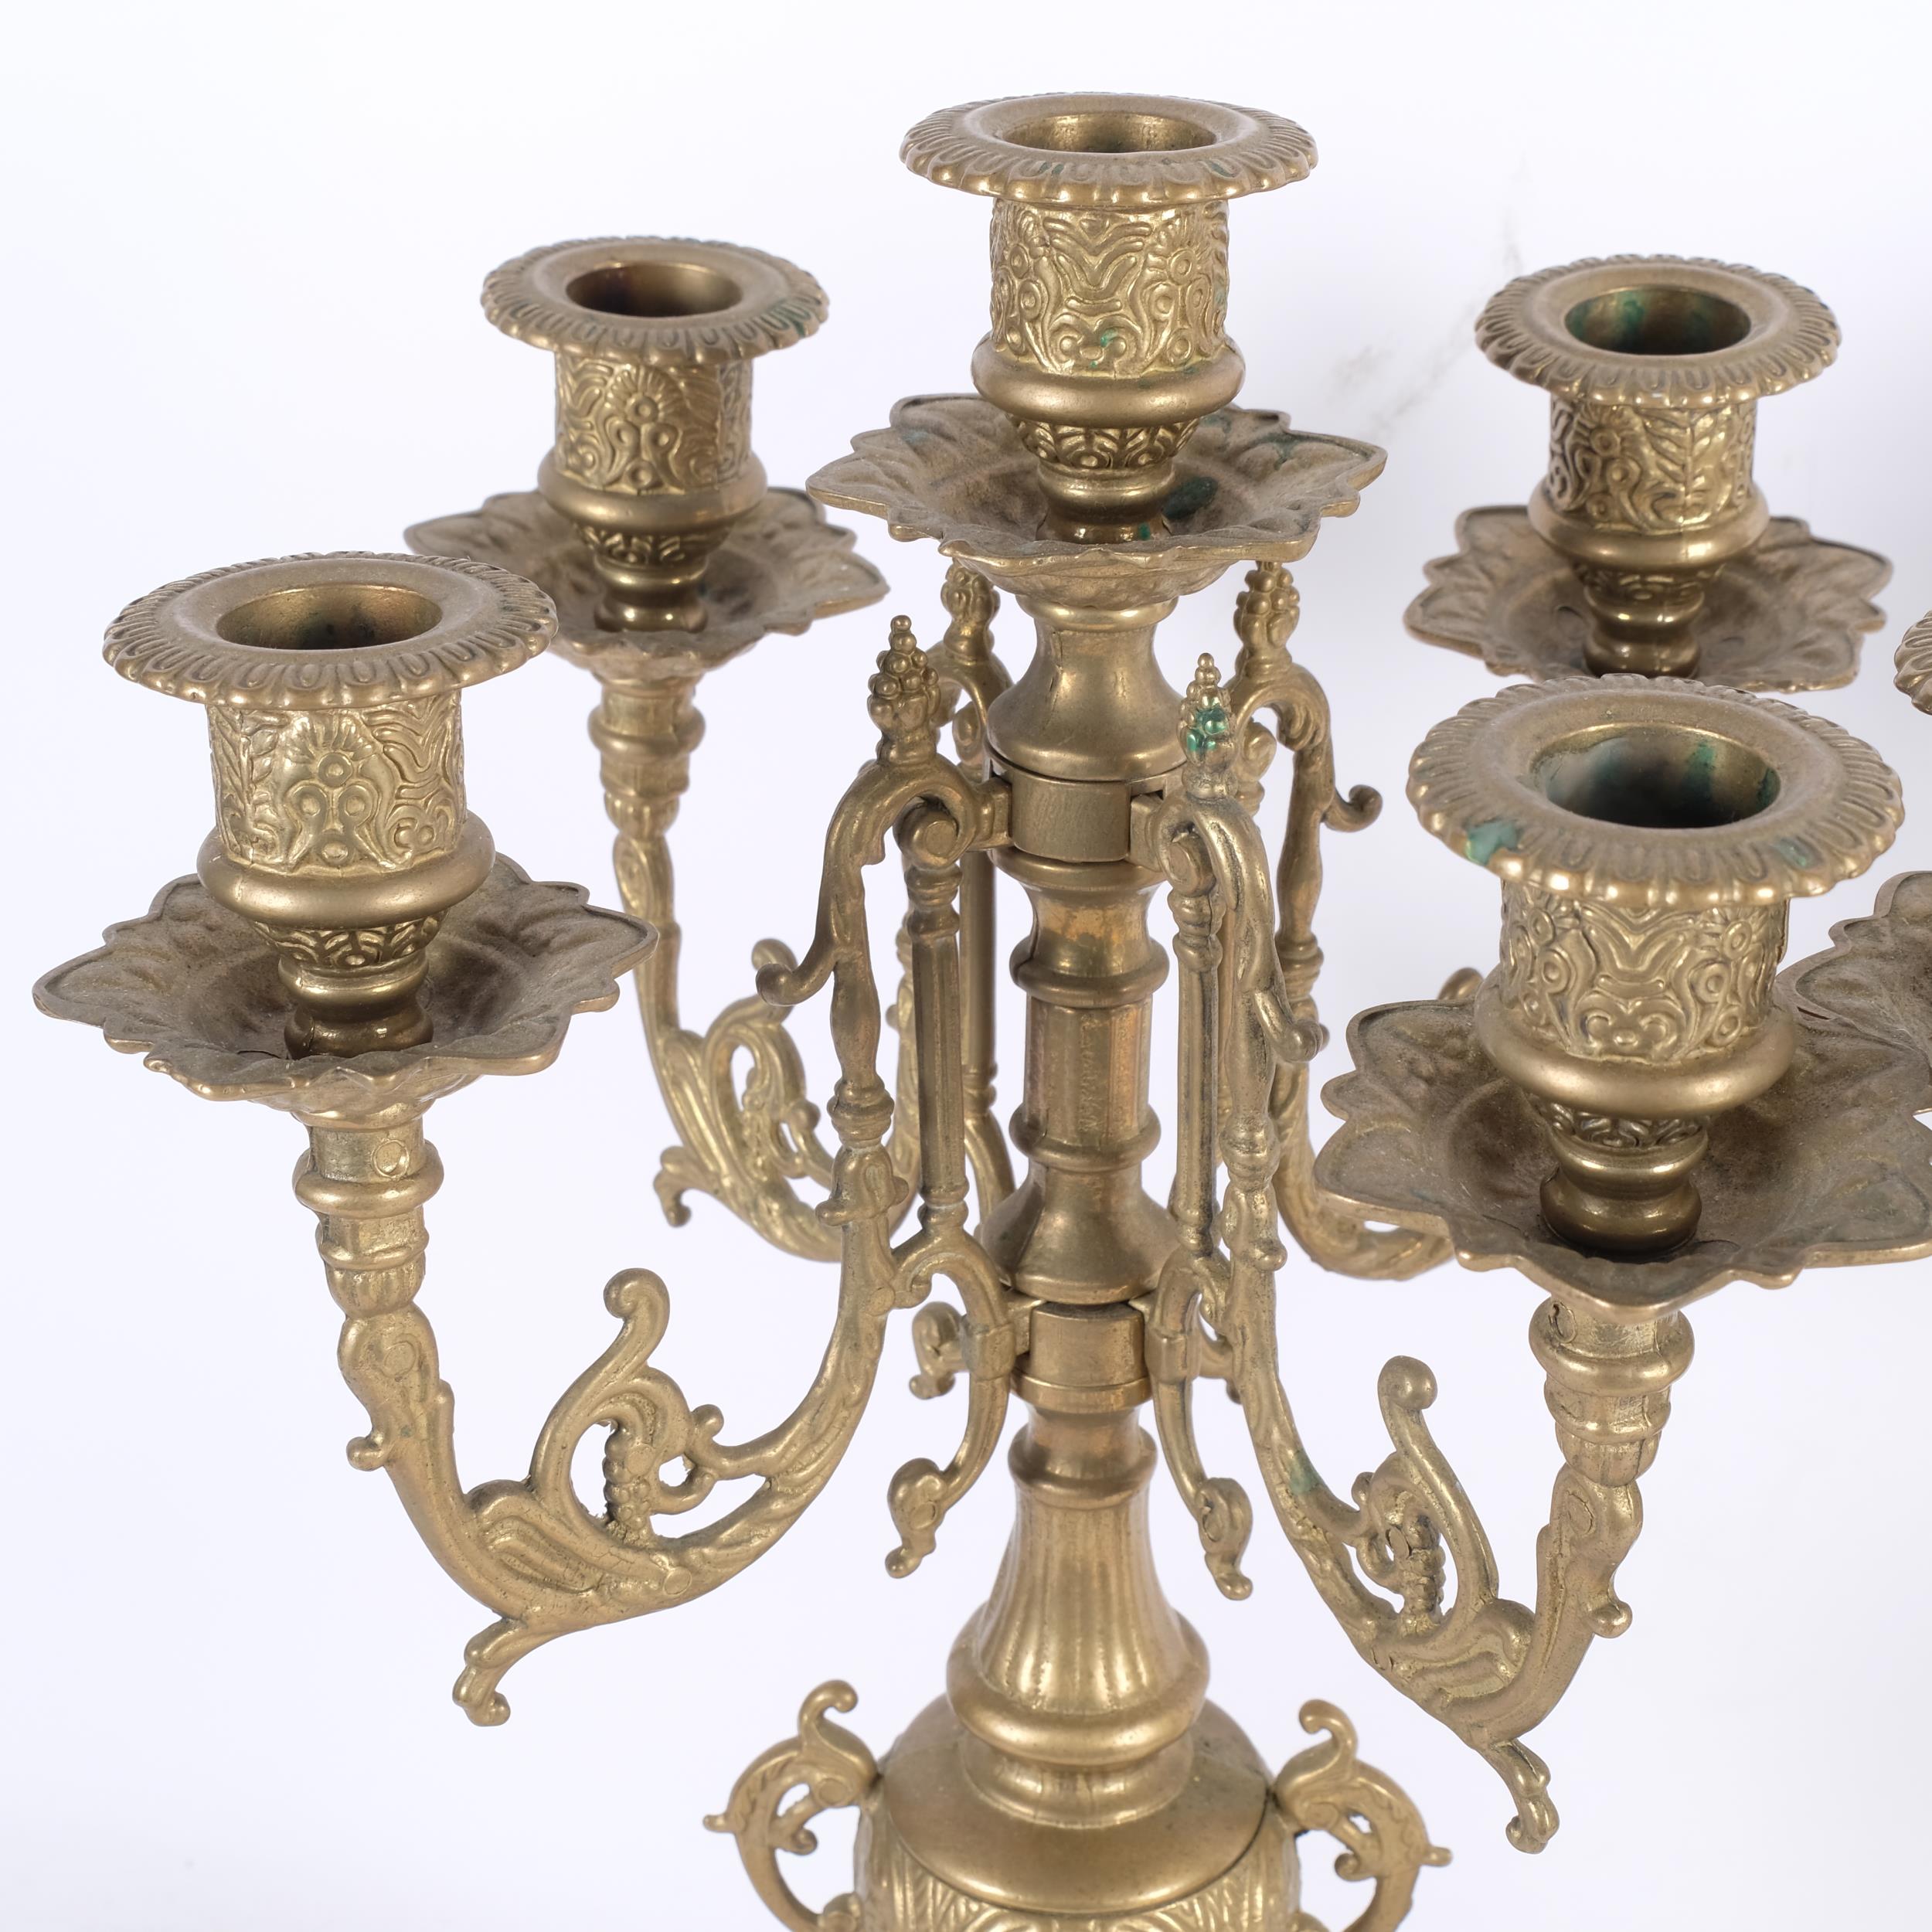 A pair of ornate cast-brass 5-light candelabra, H41cm - Image 2 of 2